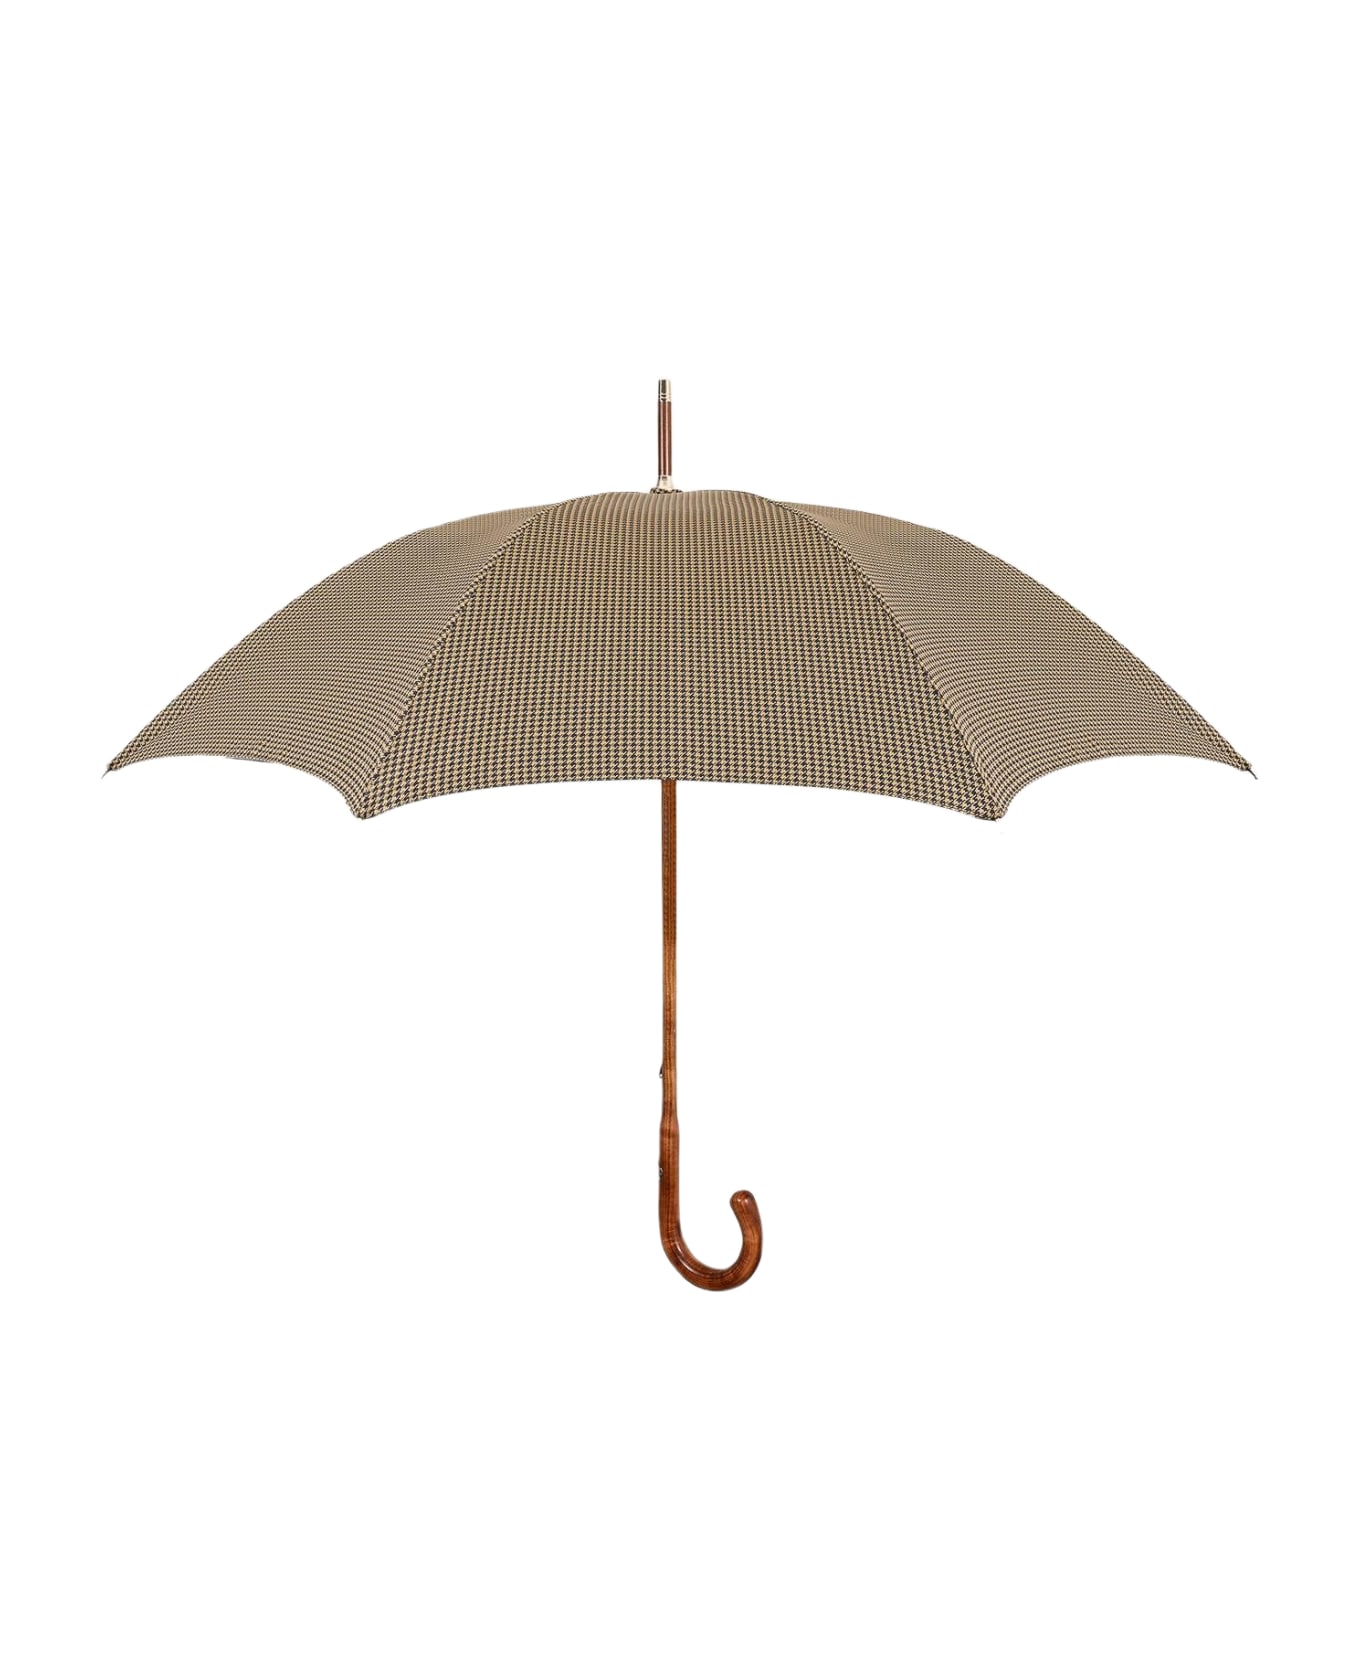 Larusmiani Umbrella 'houndstooth' Umbrella - Beige